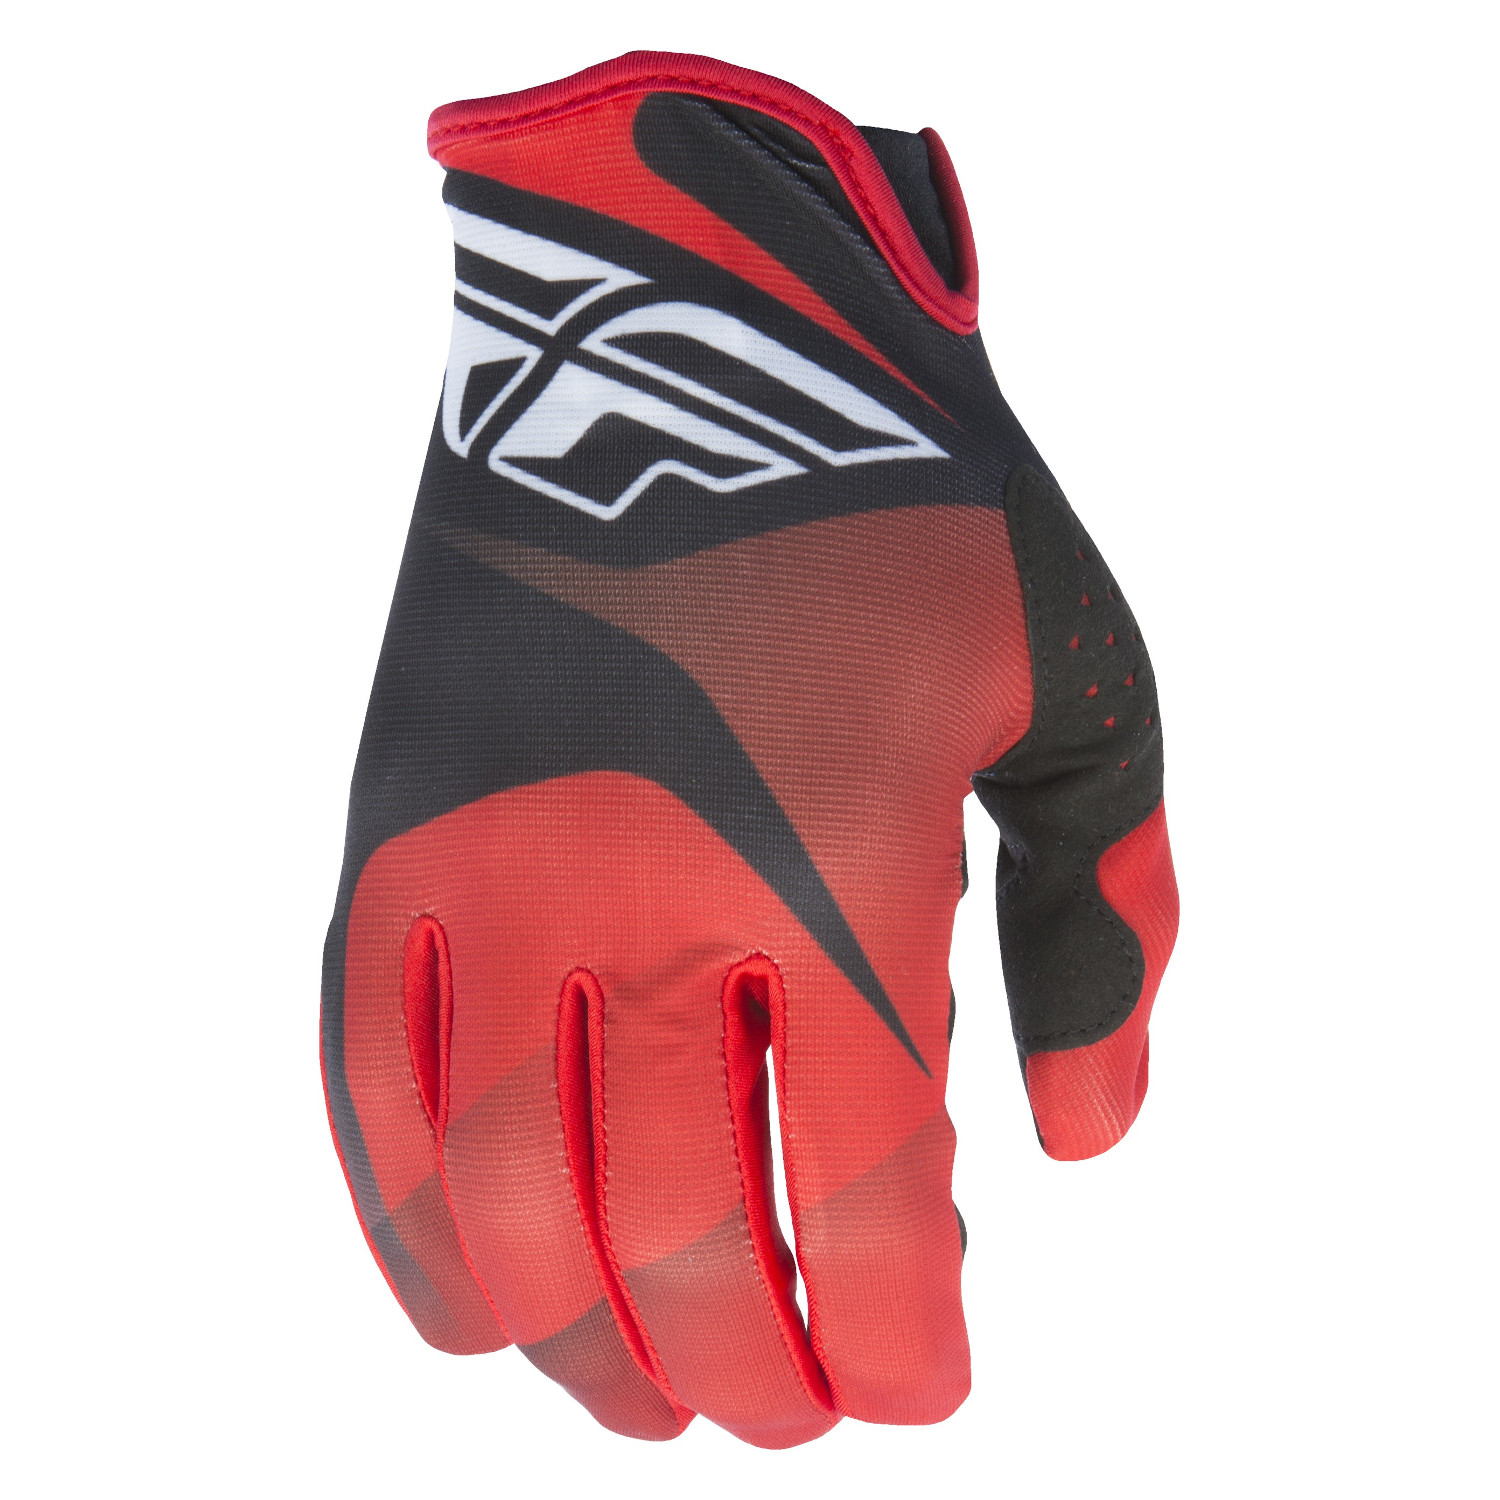 Fly Racing Handschuhe Lite Rot/Schwarz/Weiß